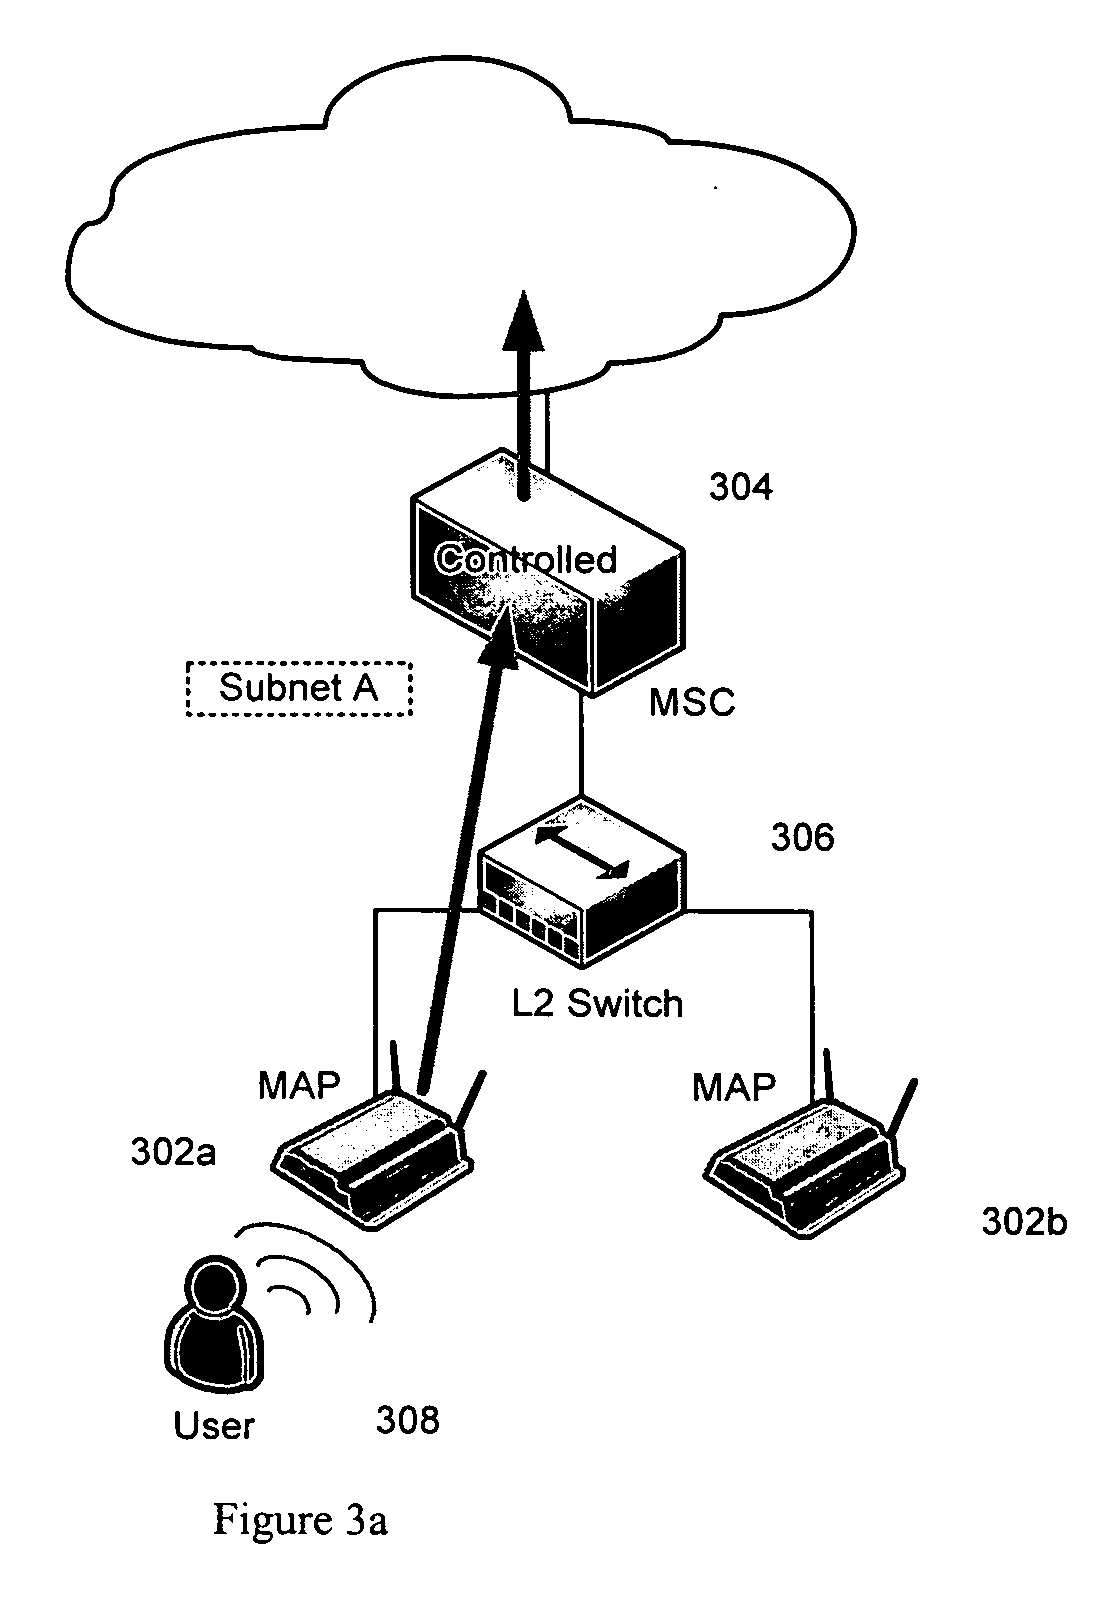 Seamless roaming across wireless subnets using source address forwarding